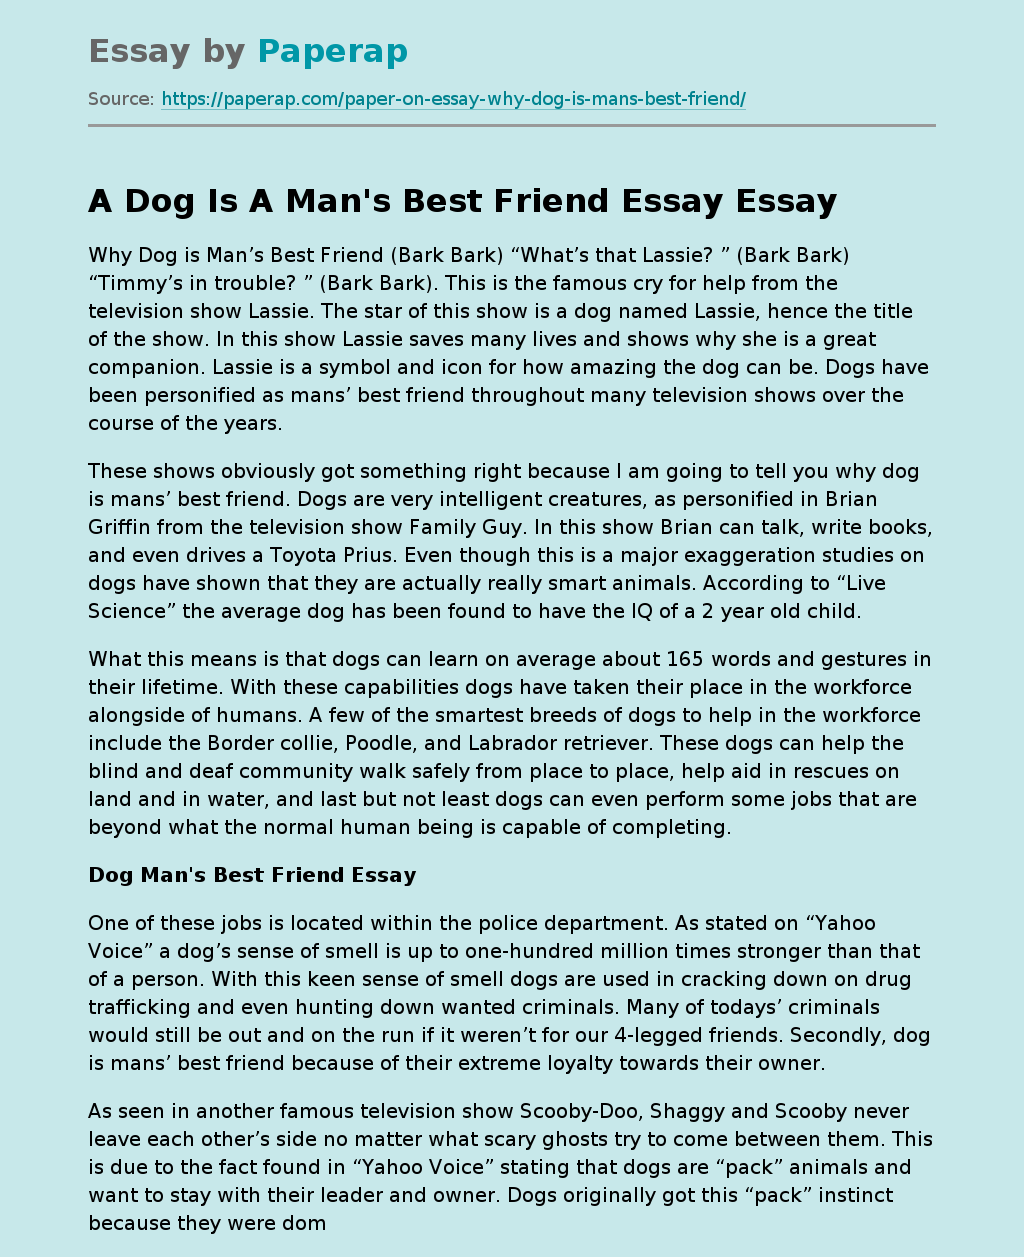 A Dog Is A Man's Best Friend Essay